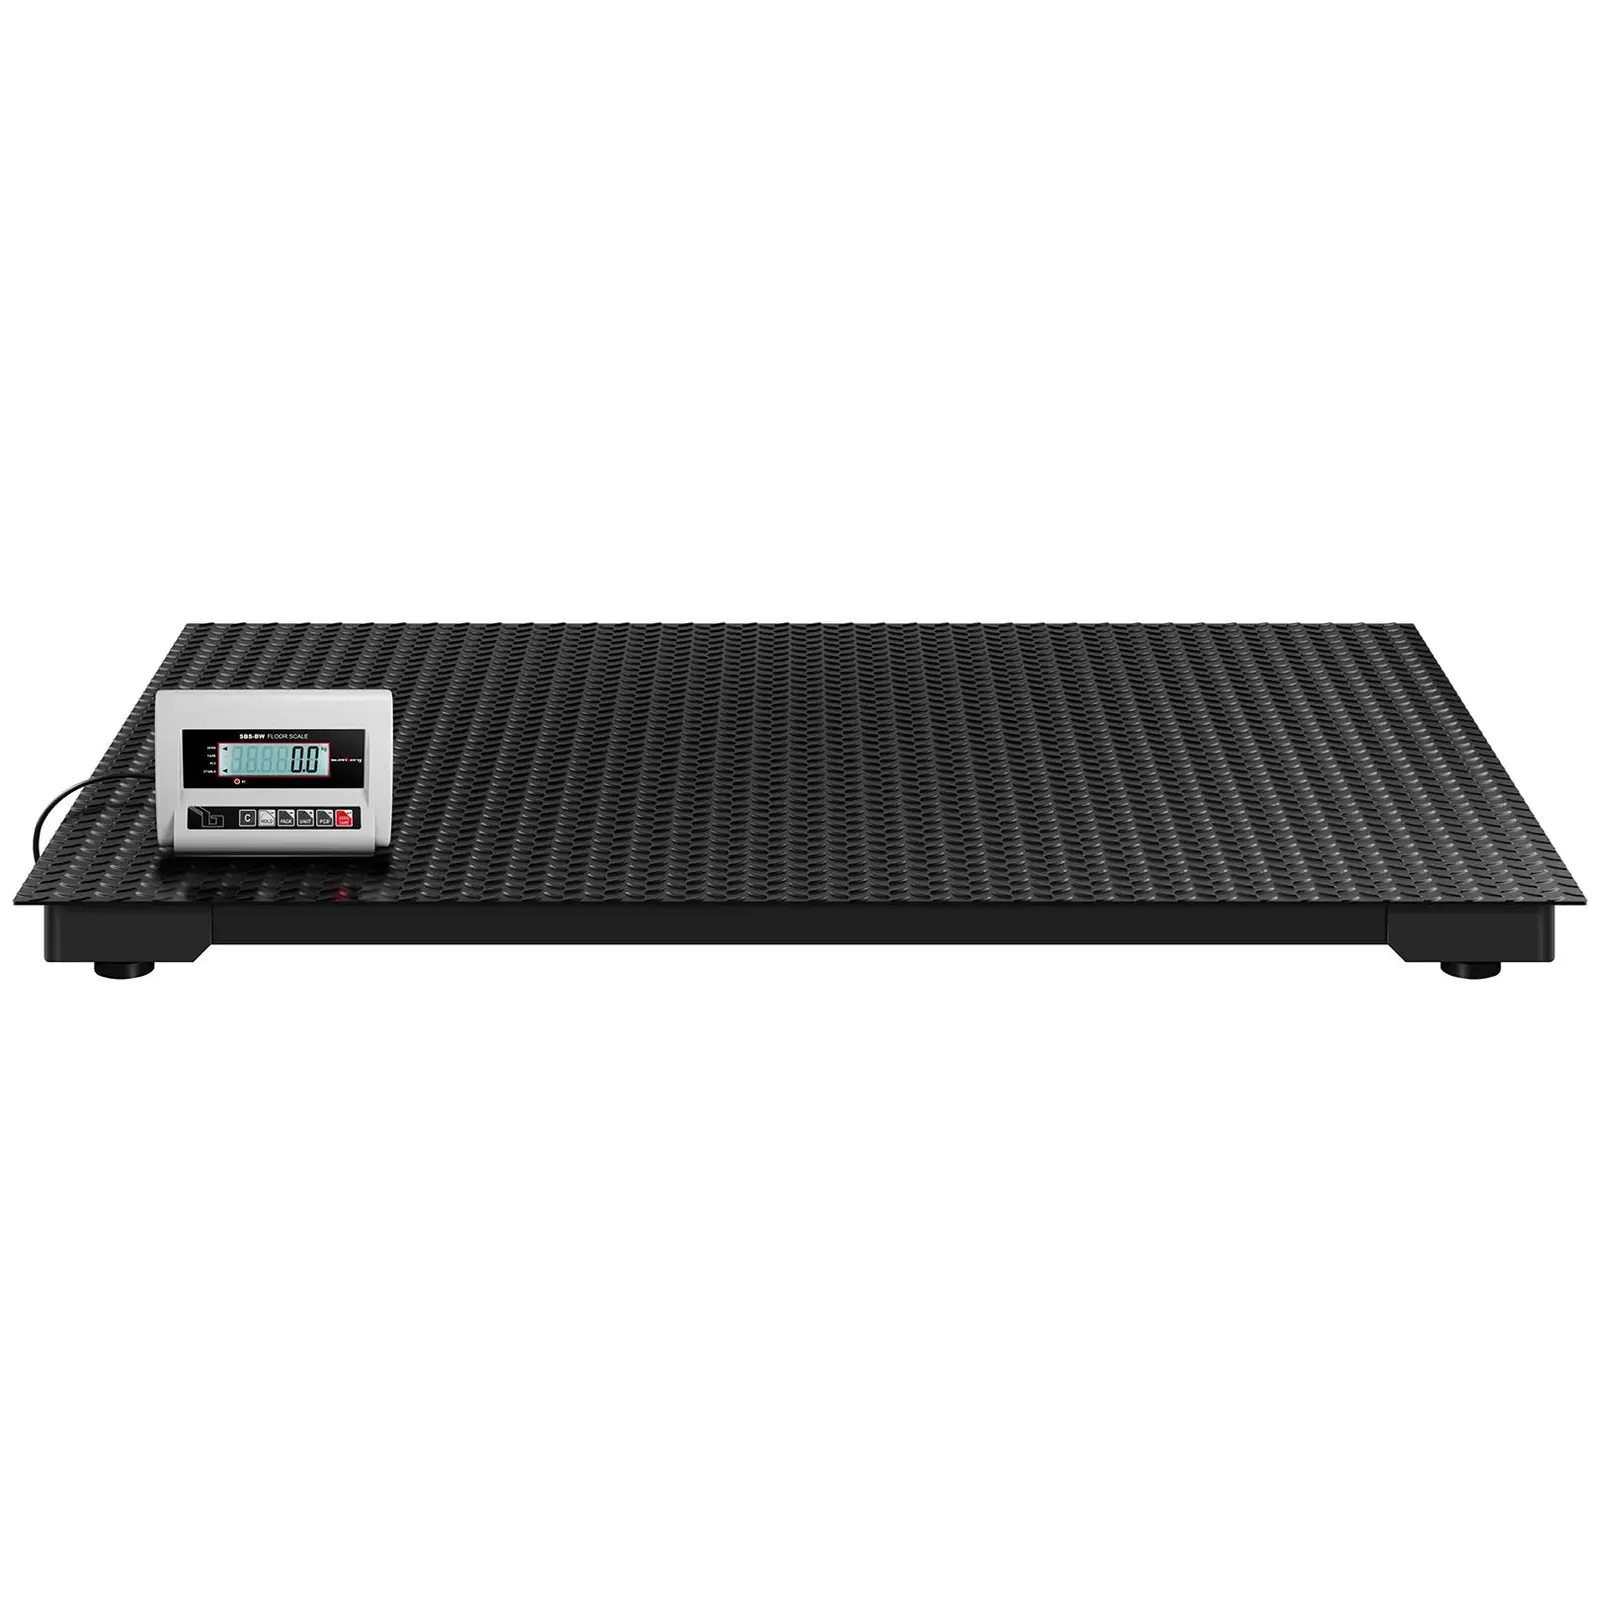 Podlahová váha s rampou - sada - 3 000 kg / 1 kg - LCD - baterie 10 h 